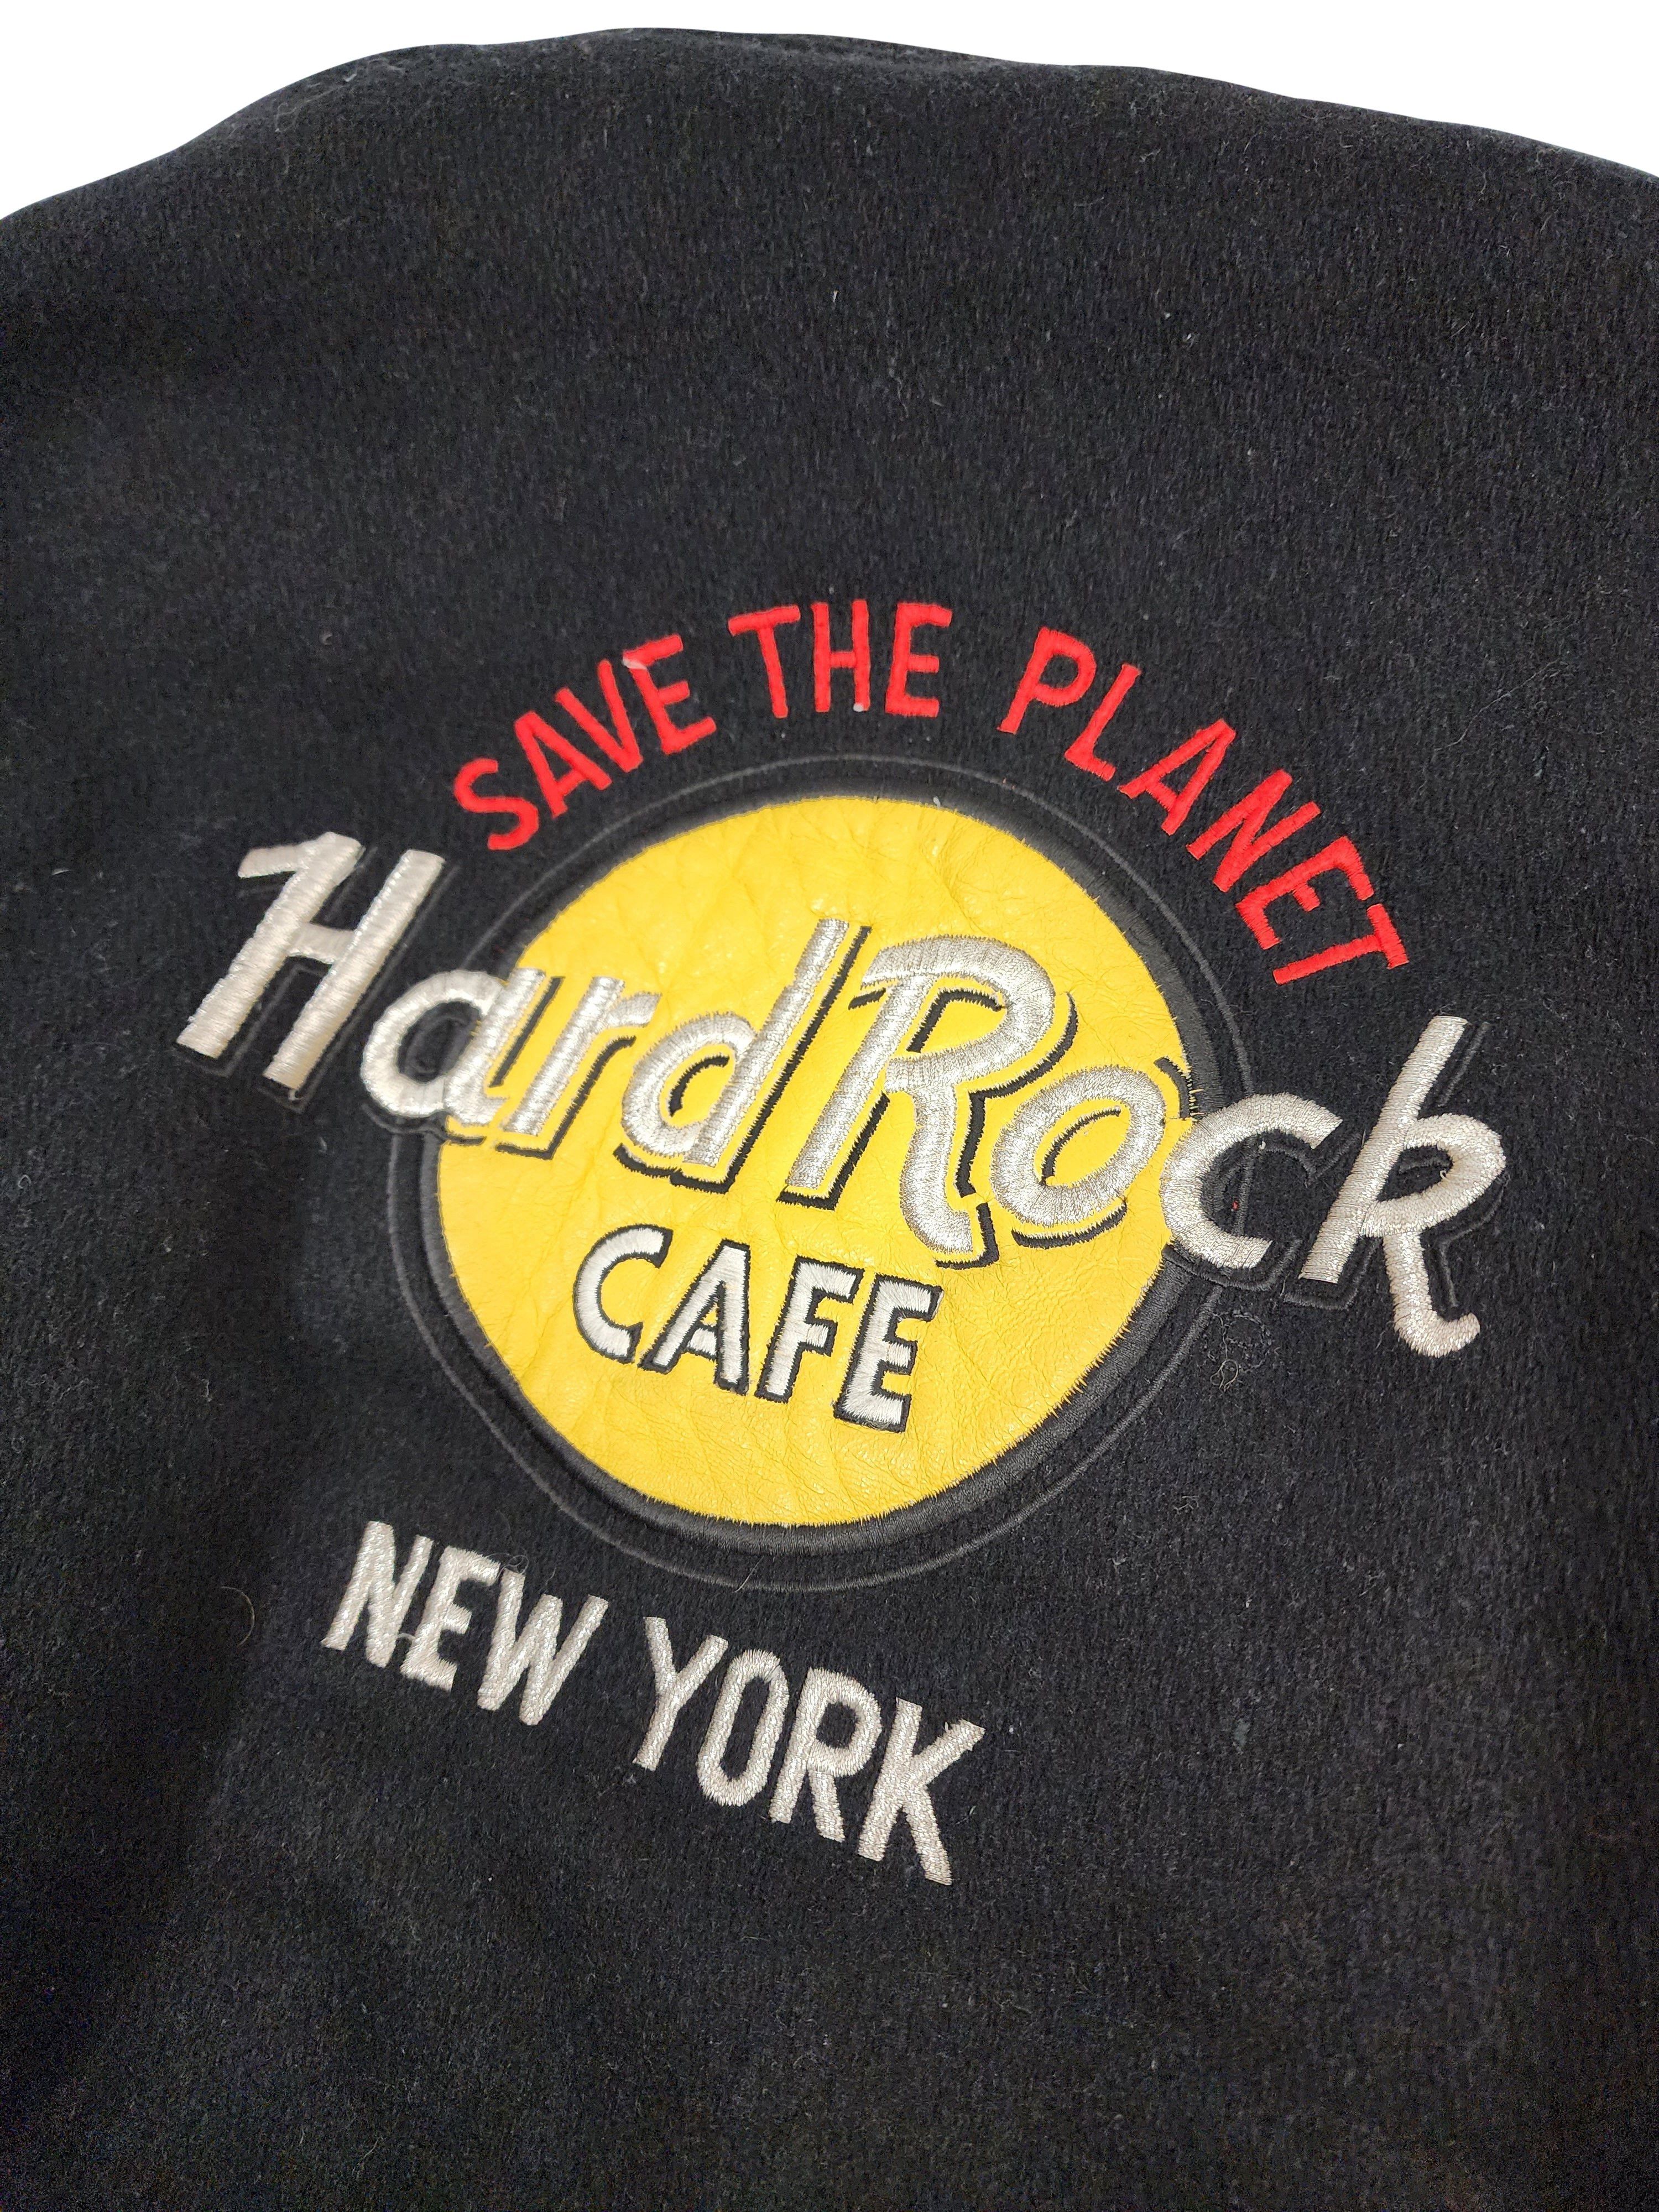 Vintage Vintage Hardrock Cafe Leather Bomber Jacket New York Size US M / EU 48-50 / 2 - 4 Thumbnail